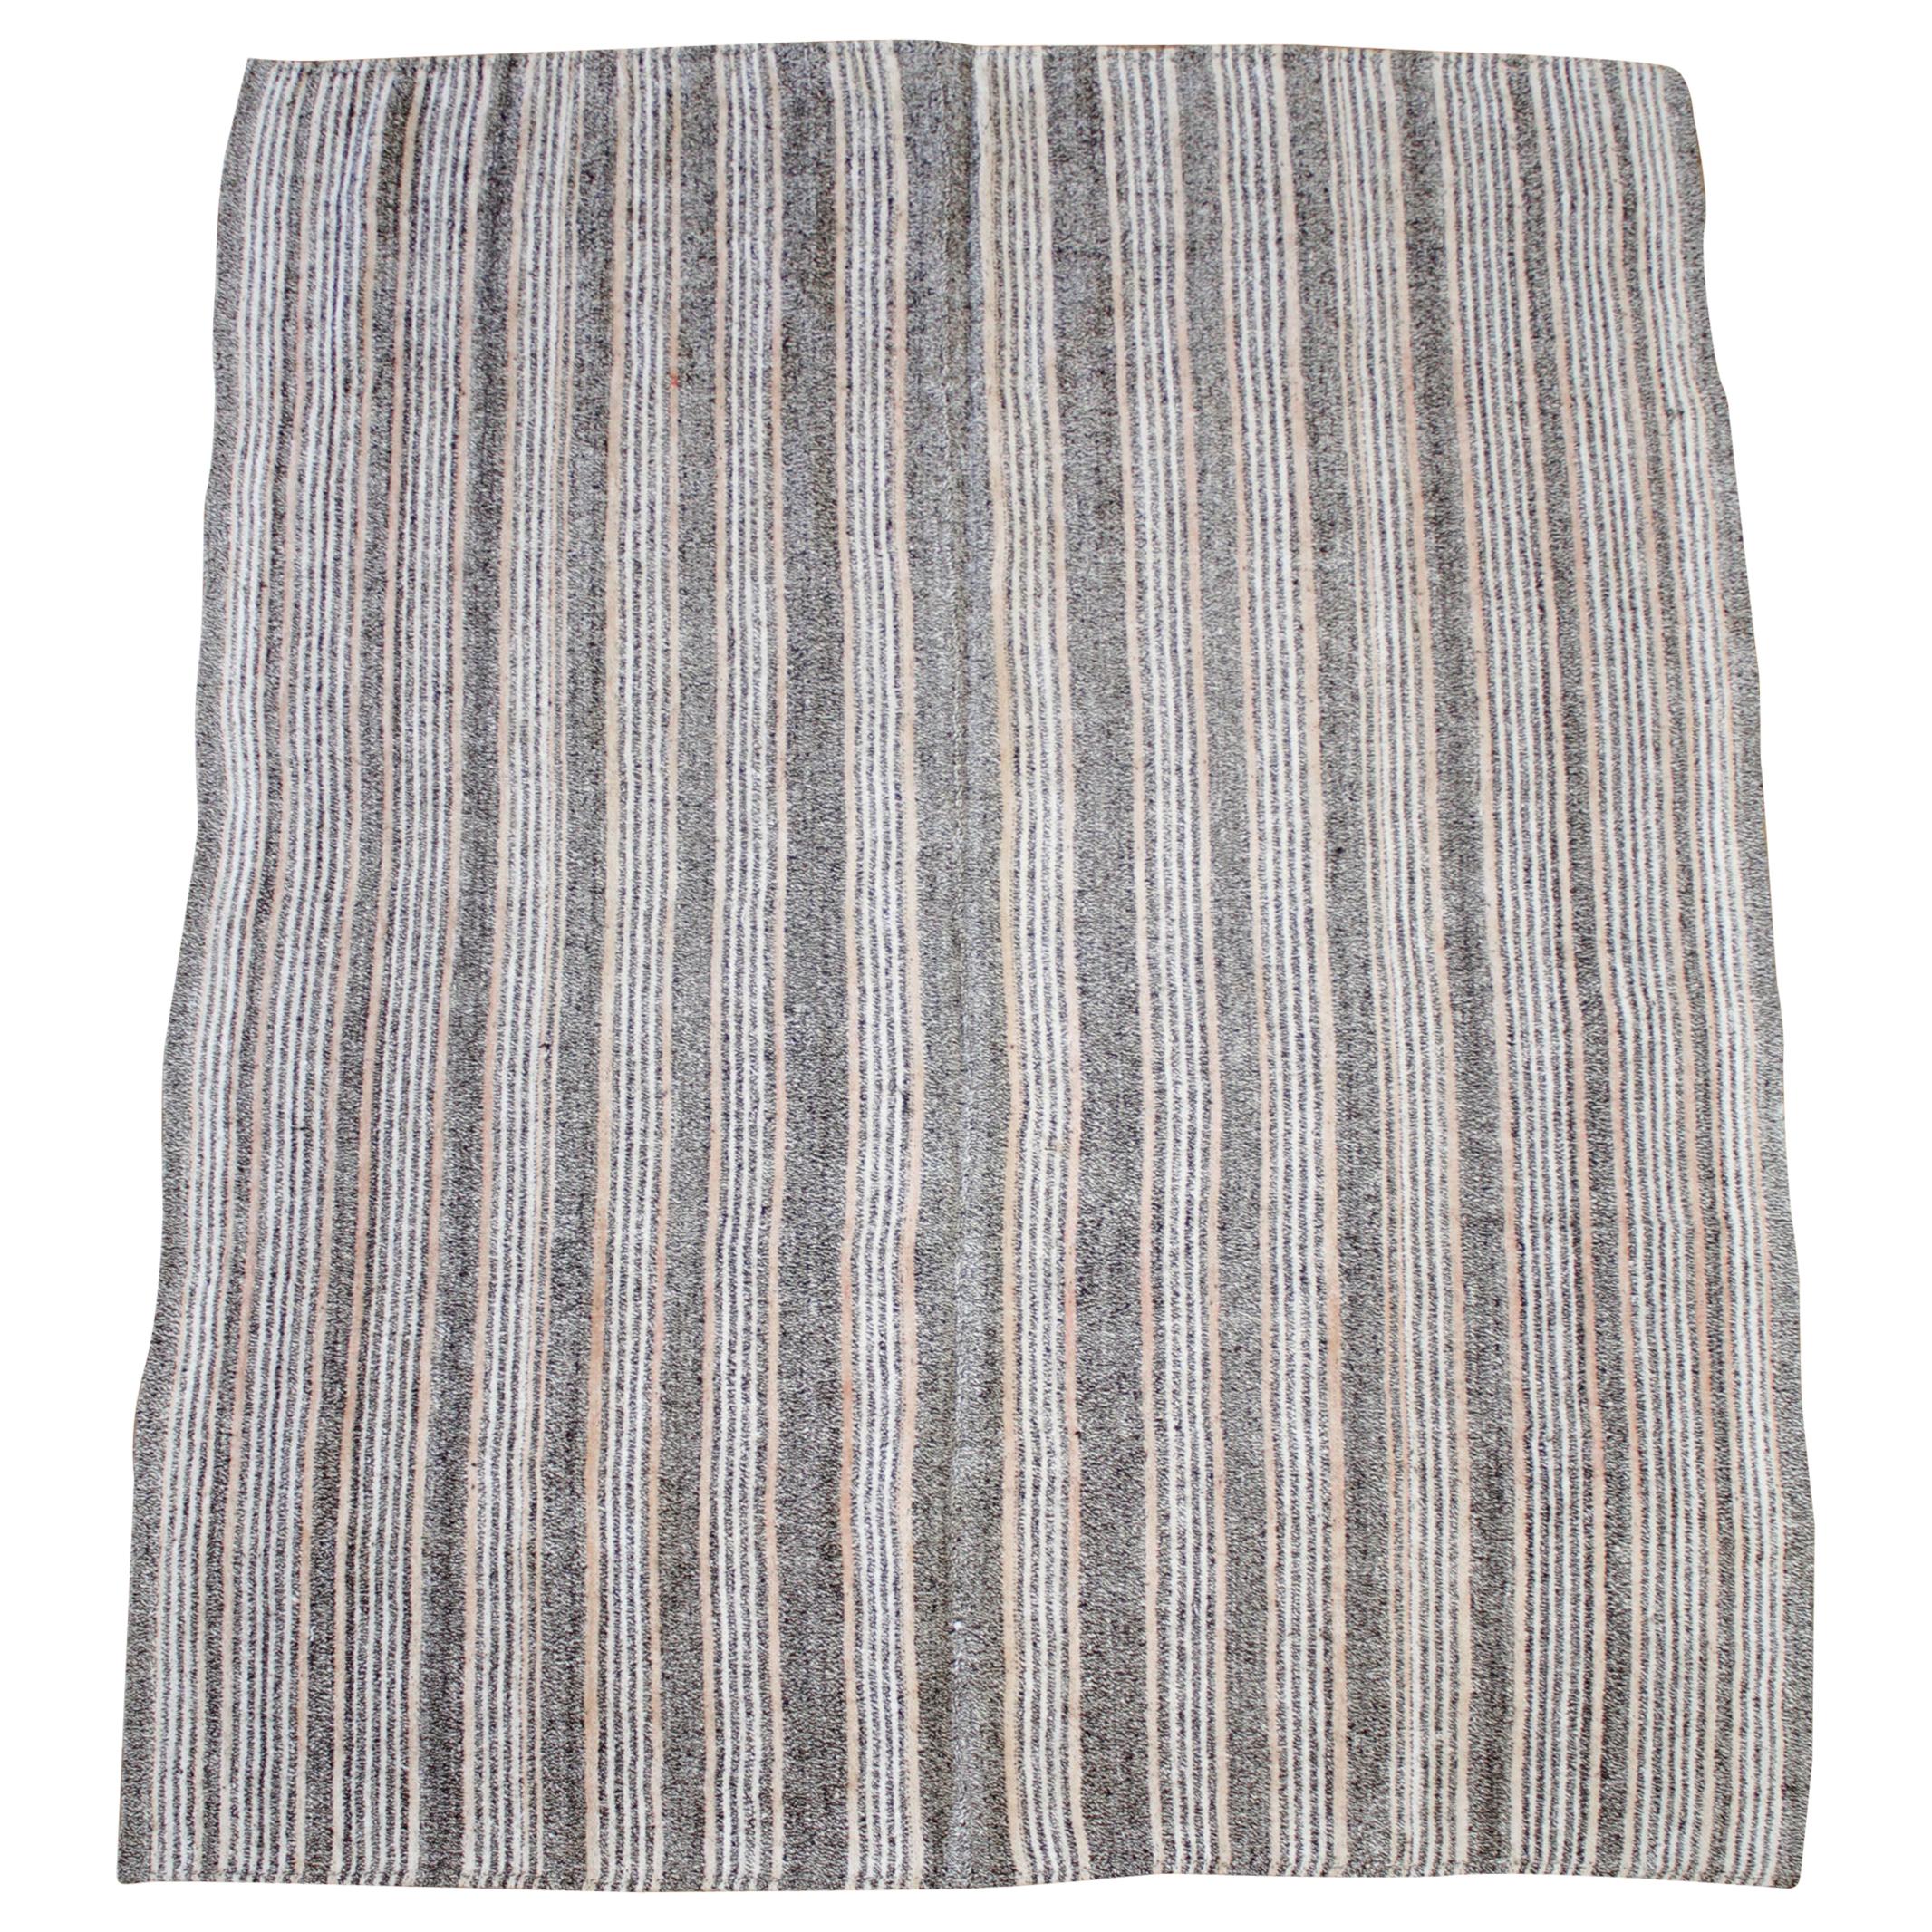 Vintage Turkish Flat-Weave Ramy Rug with Stripes